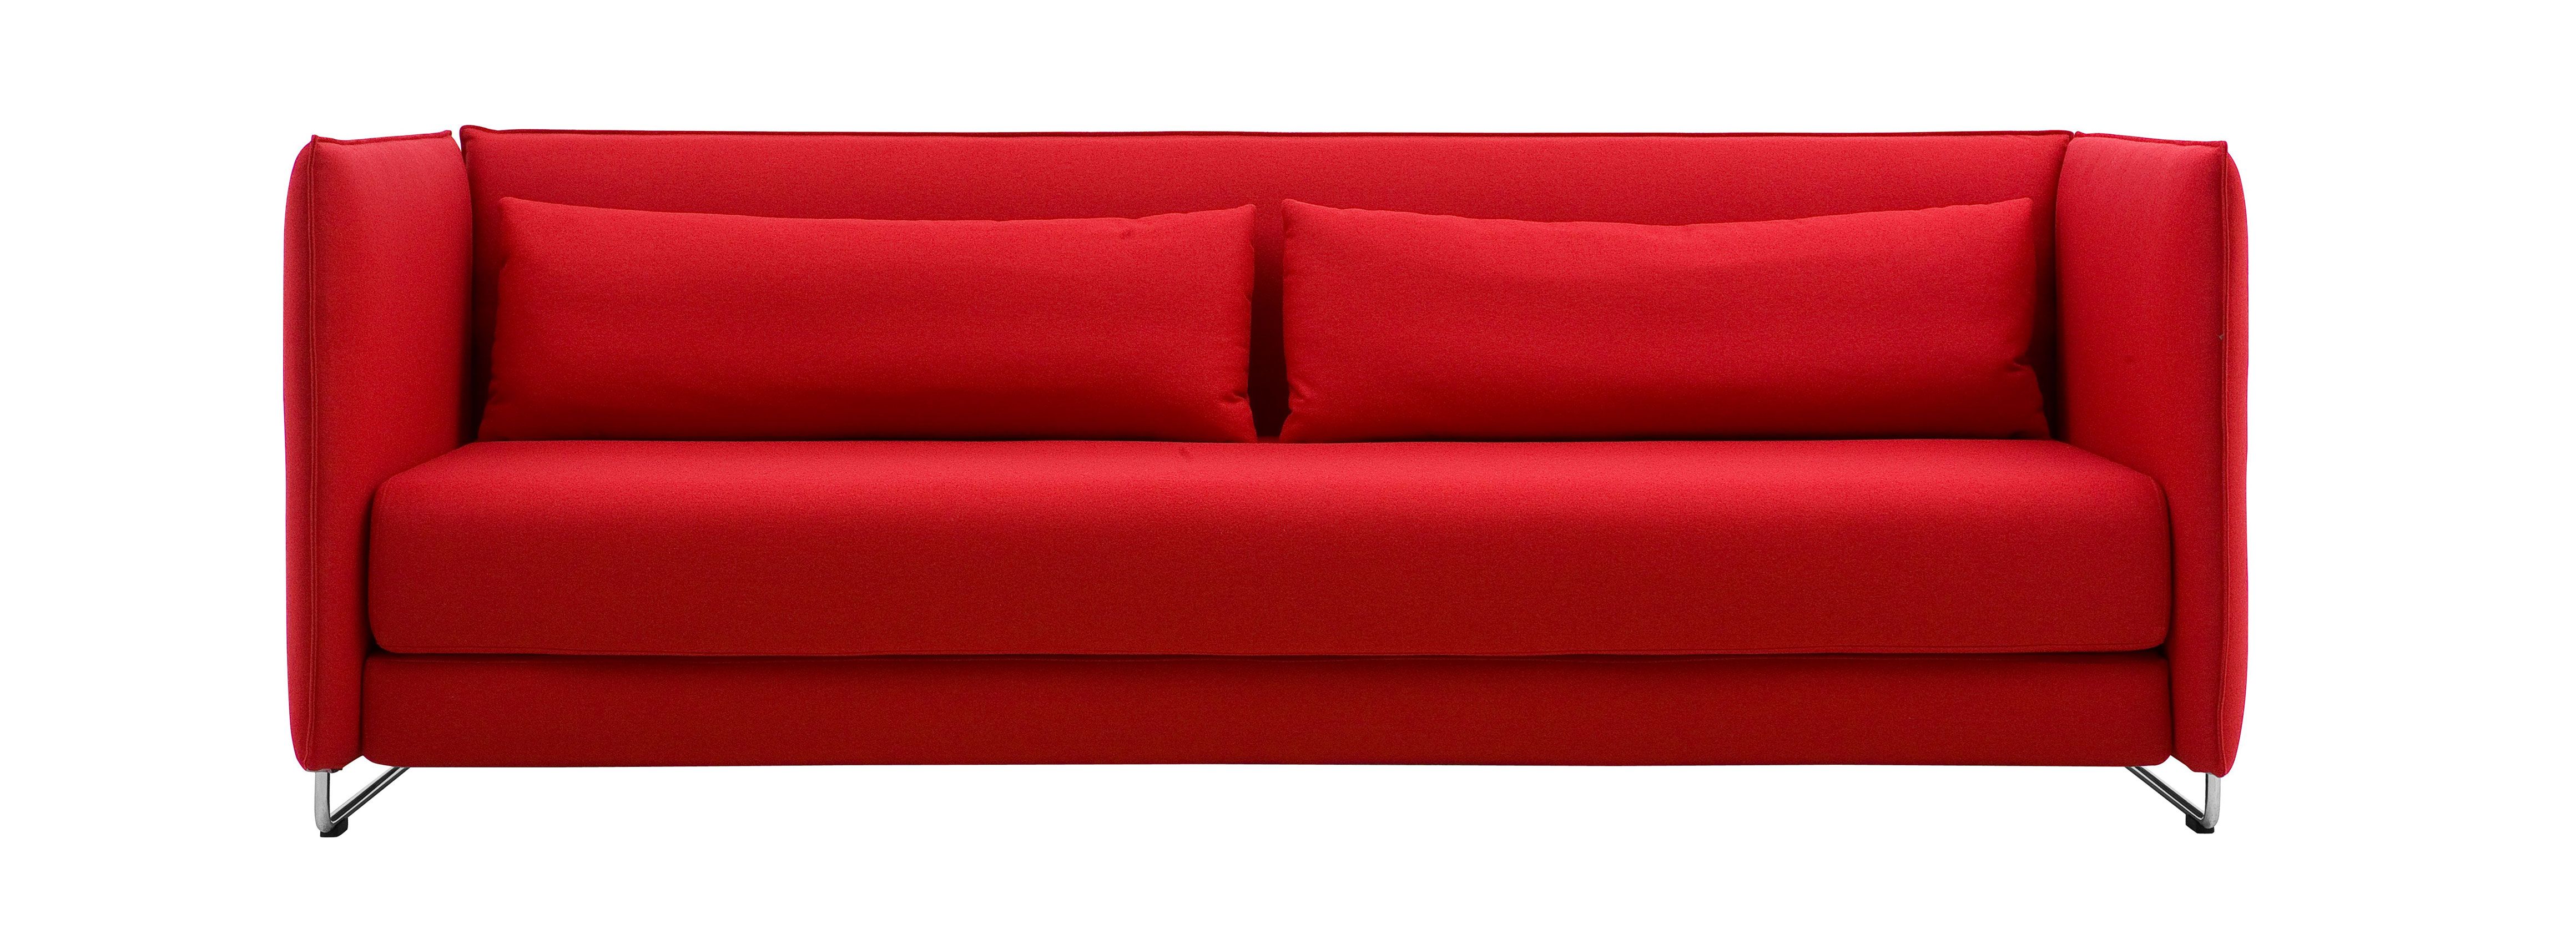 Sofa bed Metro by Softline